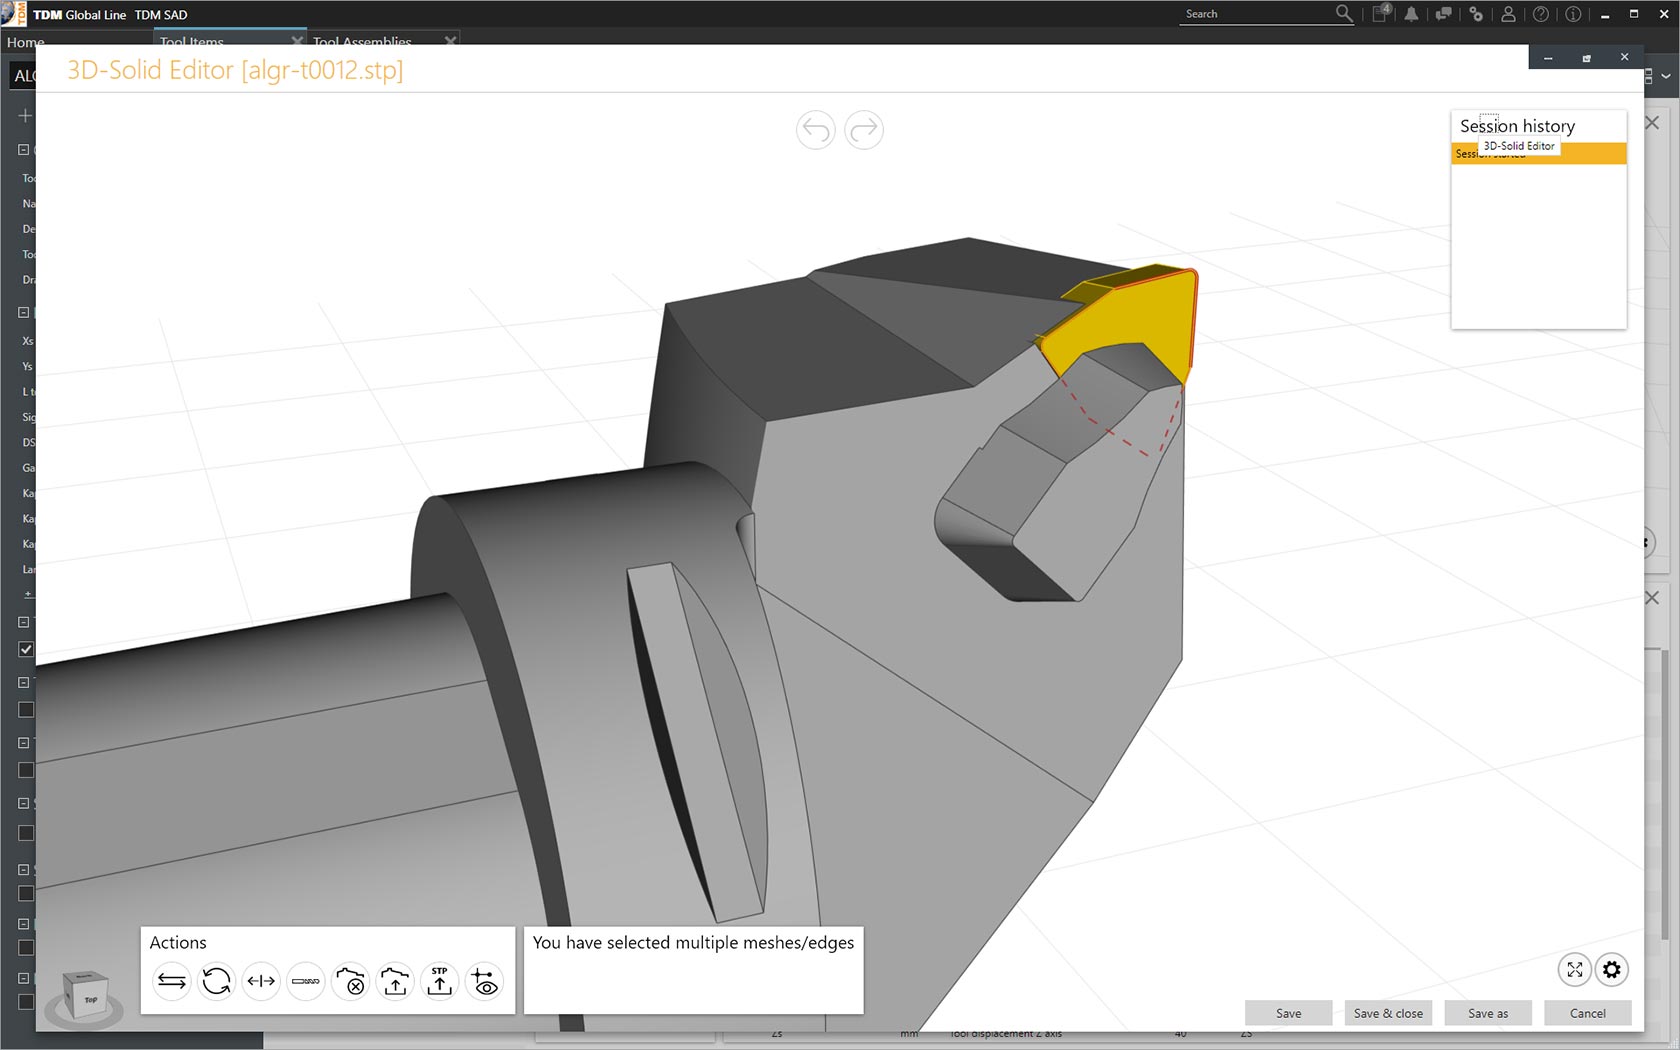 TDM Global Line, 3D Solid Editor, 3 edges selected